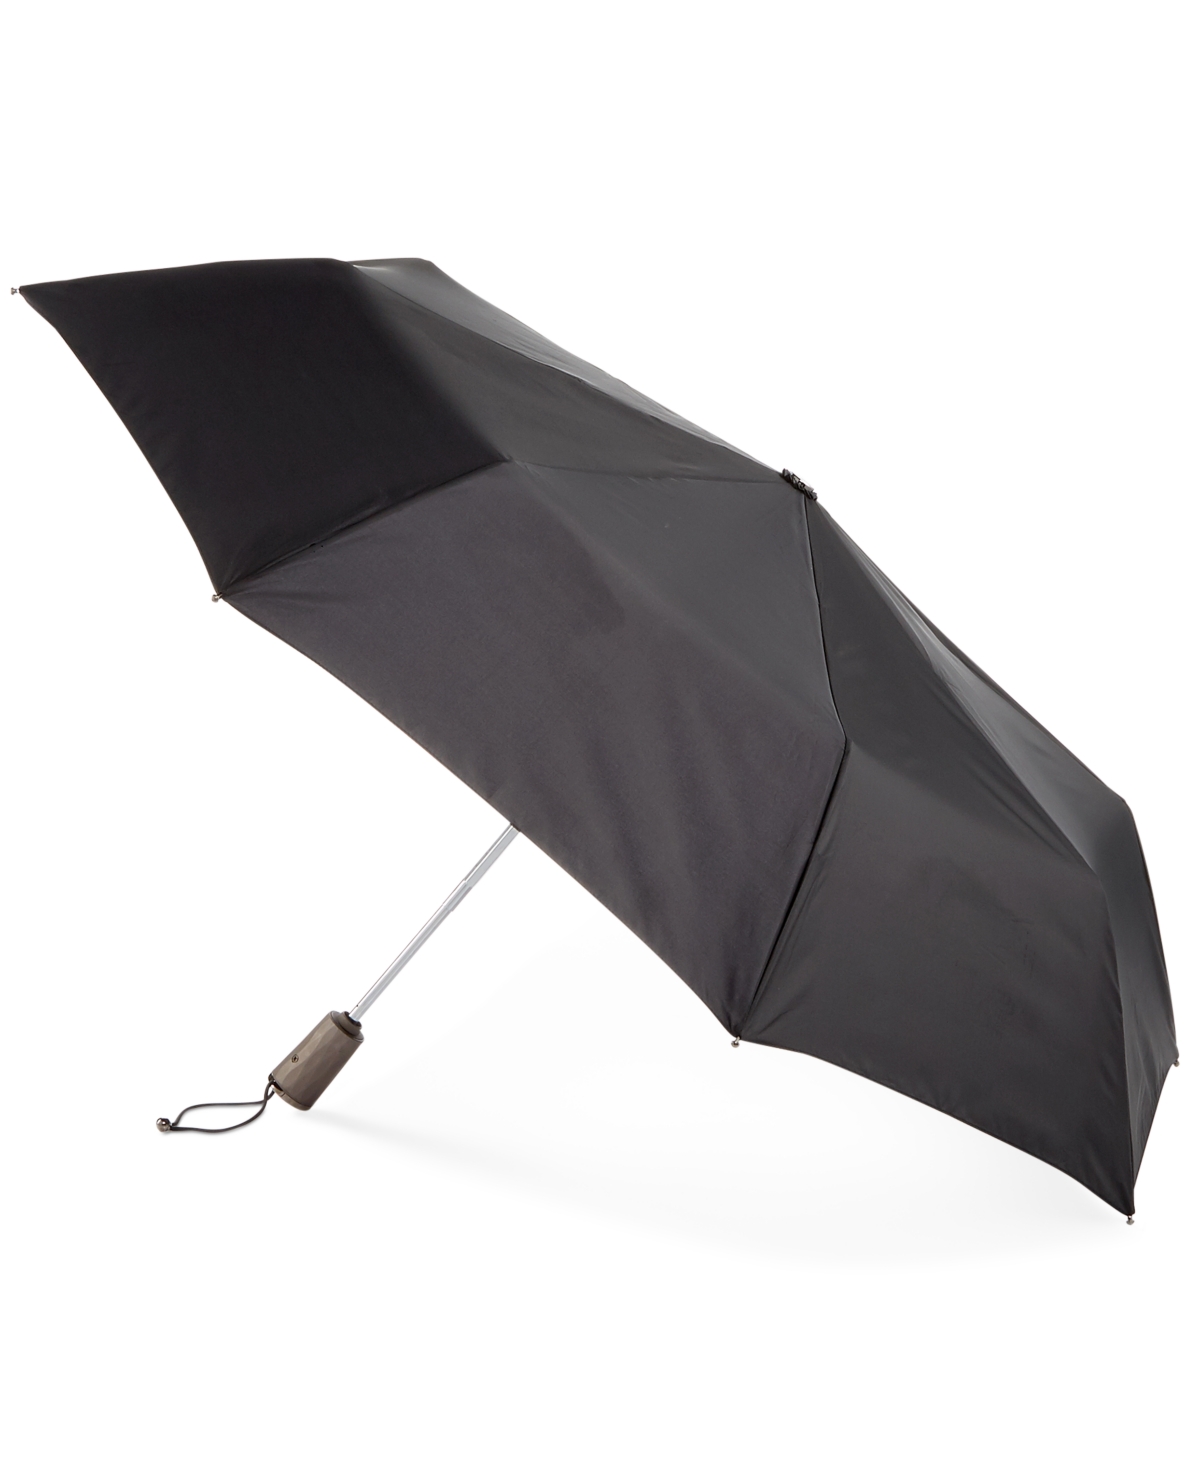 Titan Auto Open Close Umbrella with NeverWet - Black